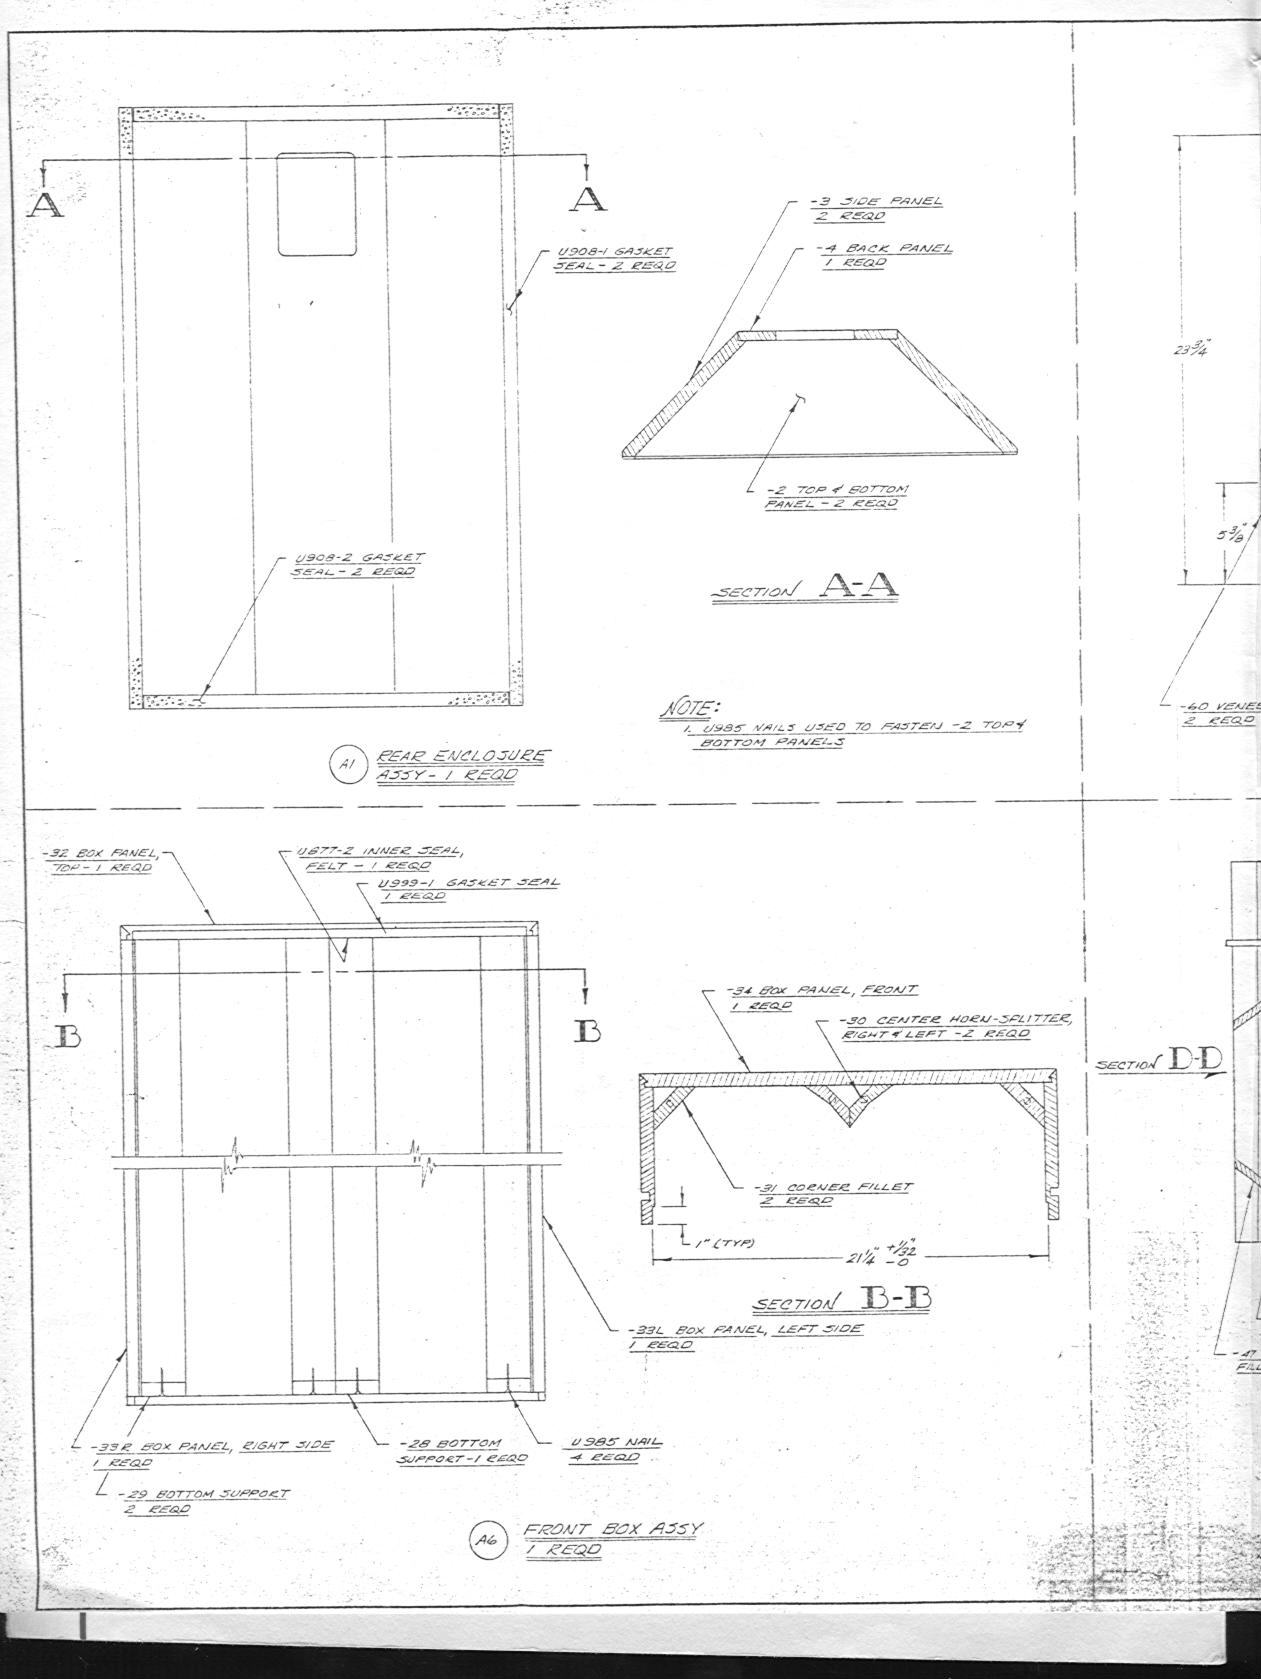 JBL - Hartsfield Cabinet - Drawing 4a